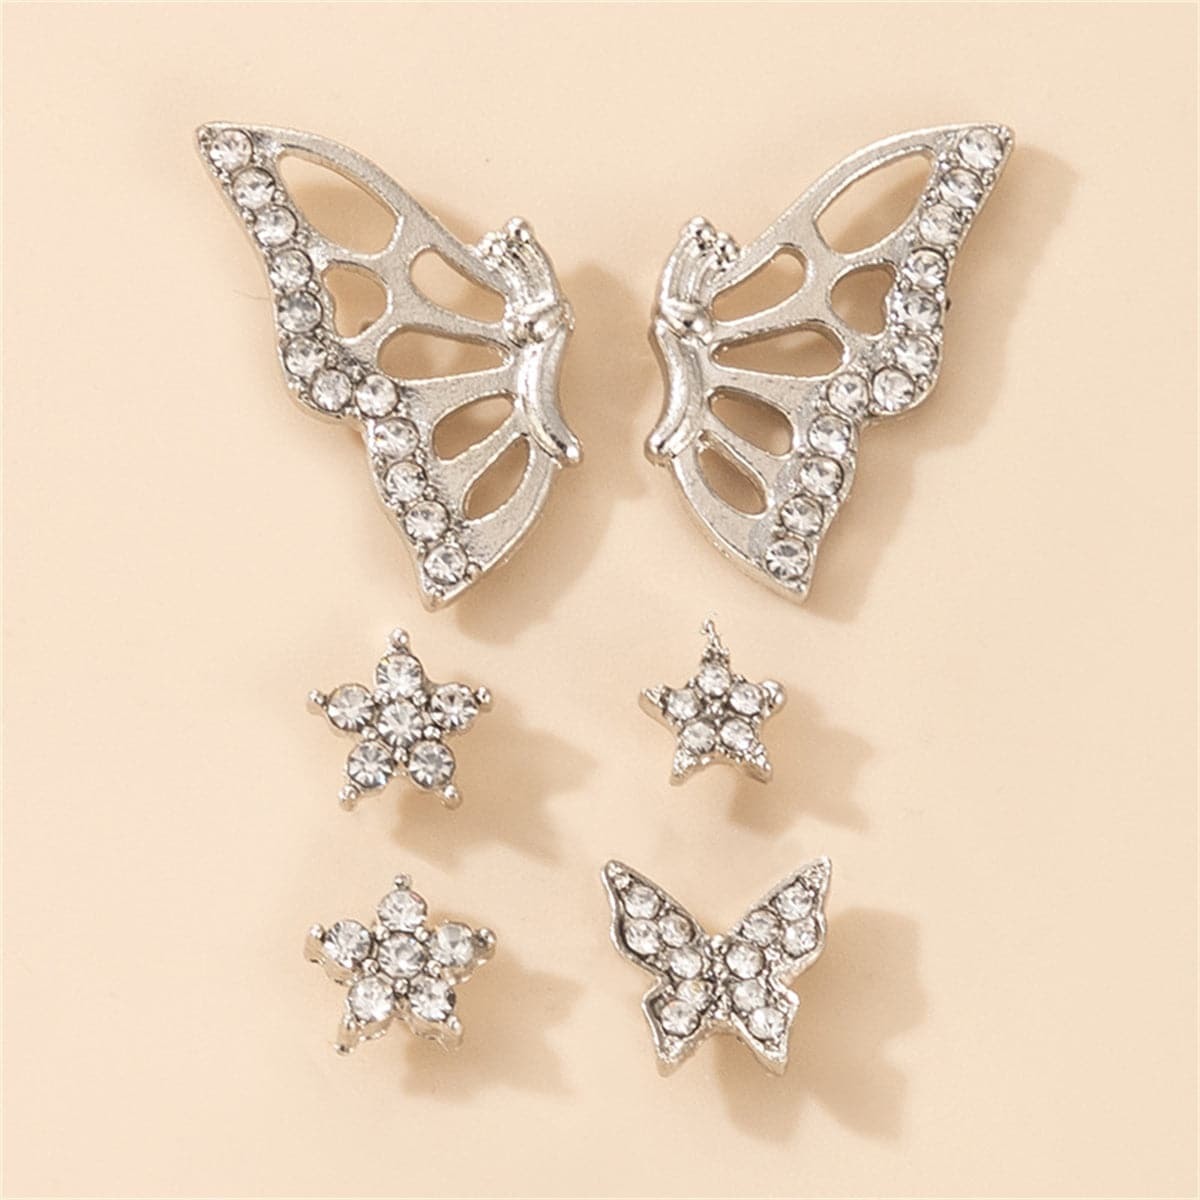 Cubic Zirconia & Silver-Plated Butterfly Earrings Set - $13.99